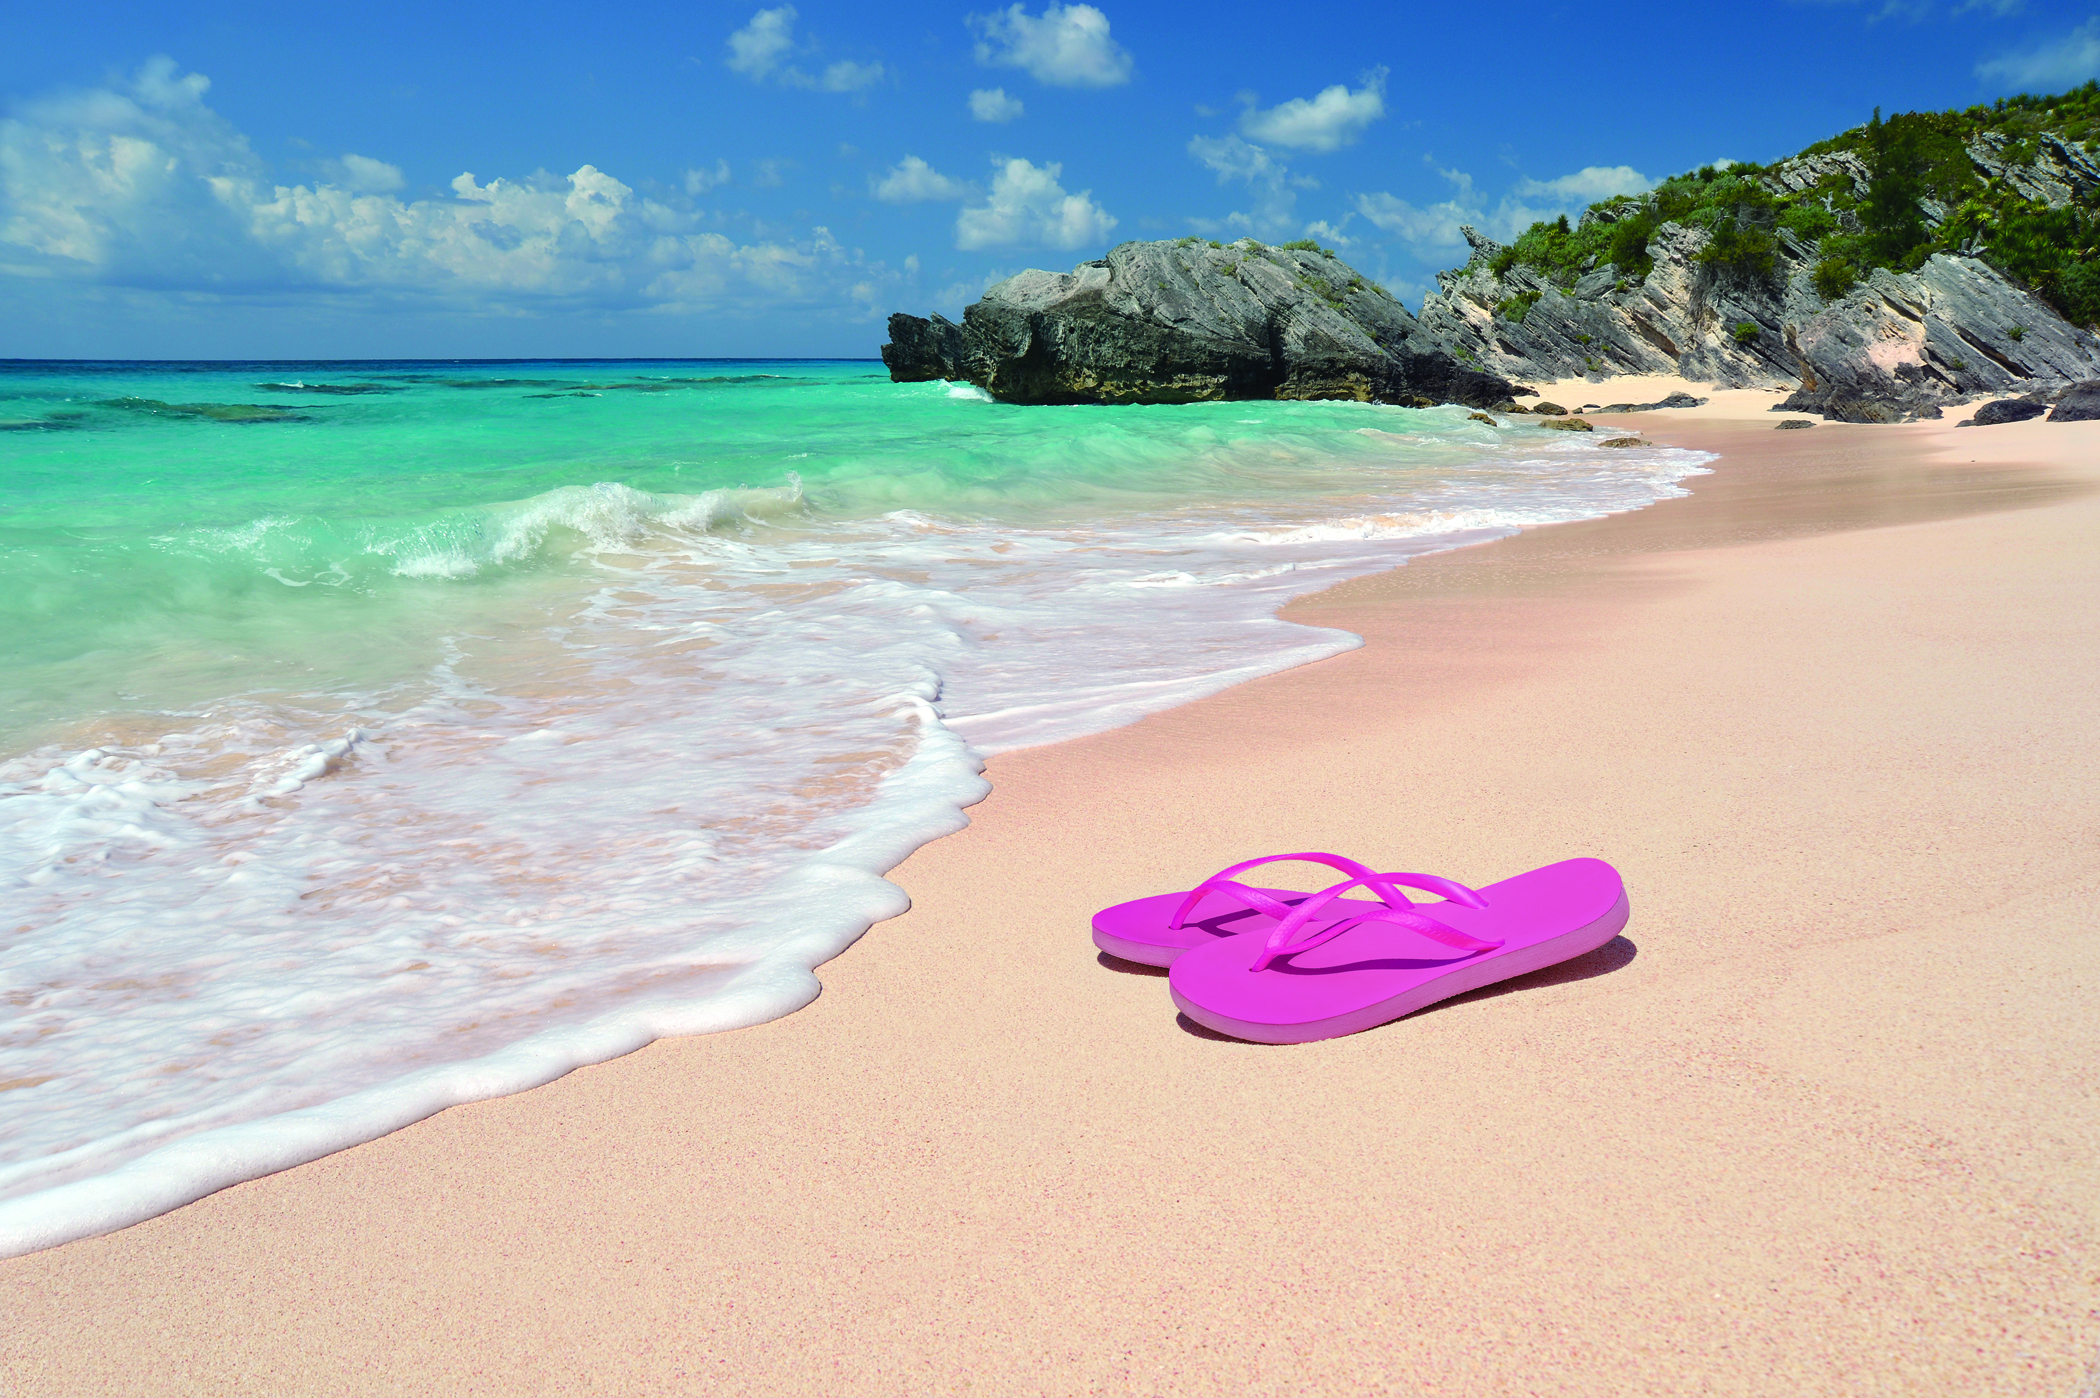 Blizkey пляж. Комодо Индонезия розовый пляж. Пинк-Сэндс-Бич, Багамские острова. Пляж Пинк Сэндс Бич Багамские острова. Розовый пляж Багамы.